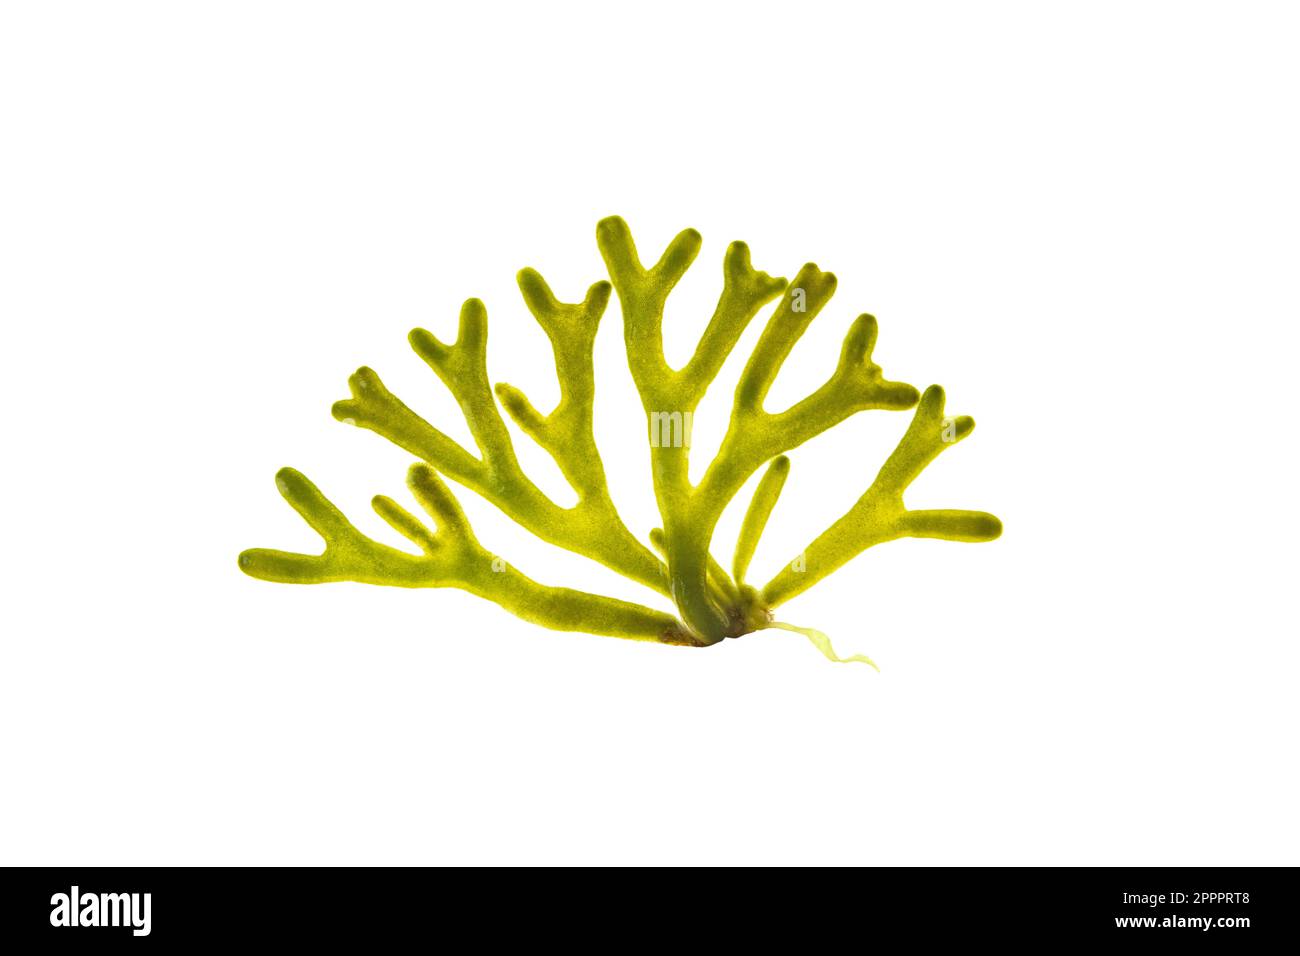 Codium tomentosum or velvet horn green seaweed isolated on white. Green alga branch. Stock Photo